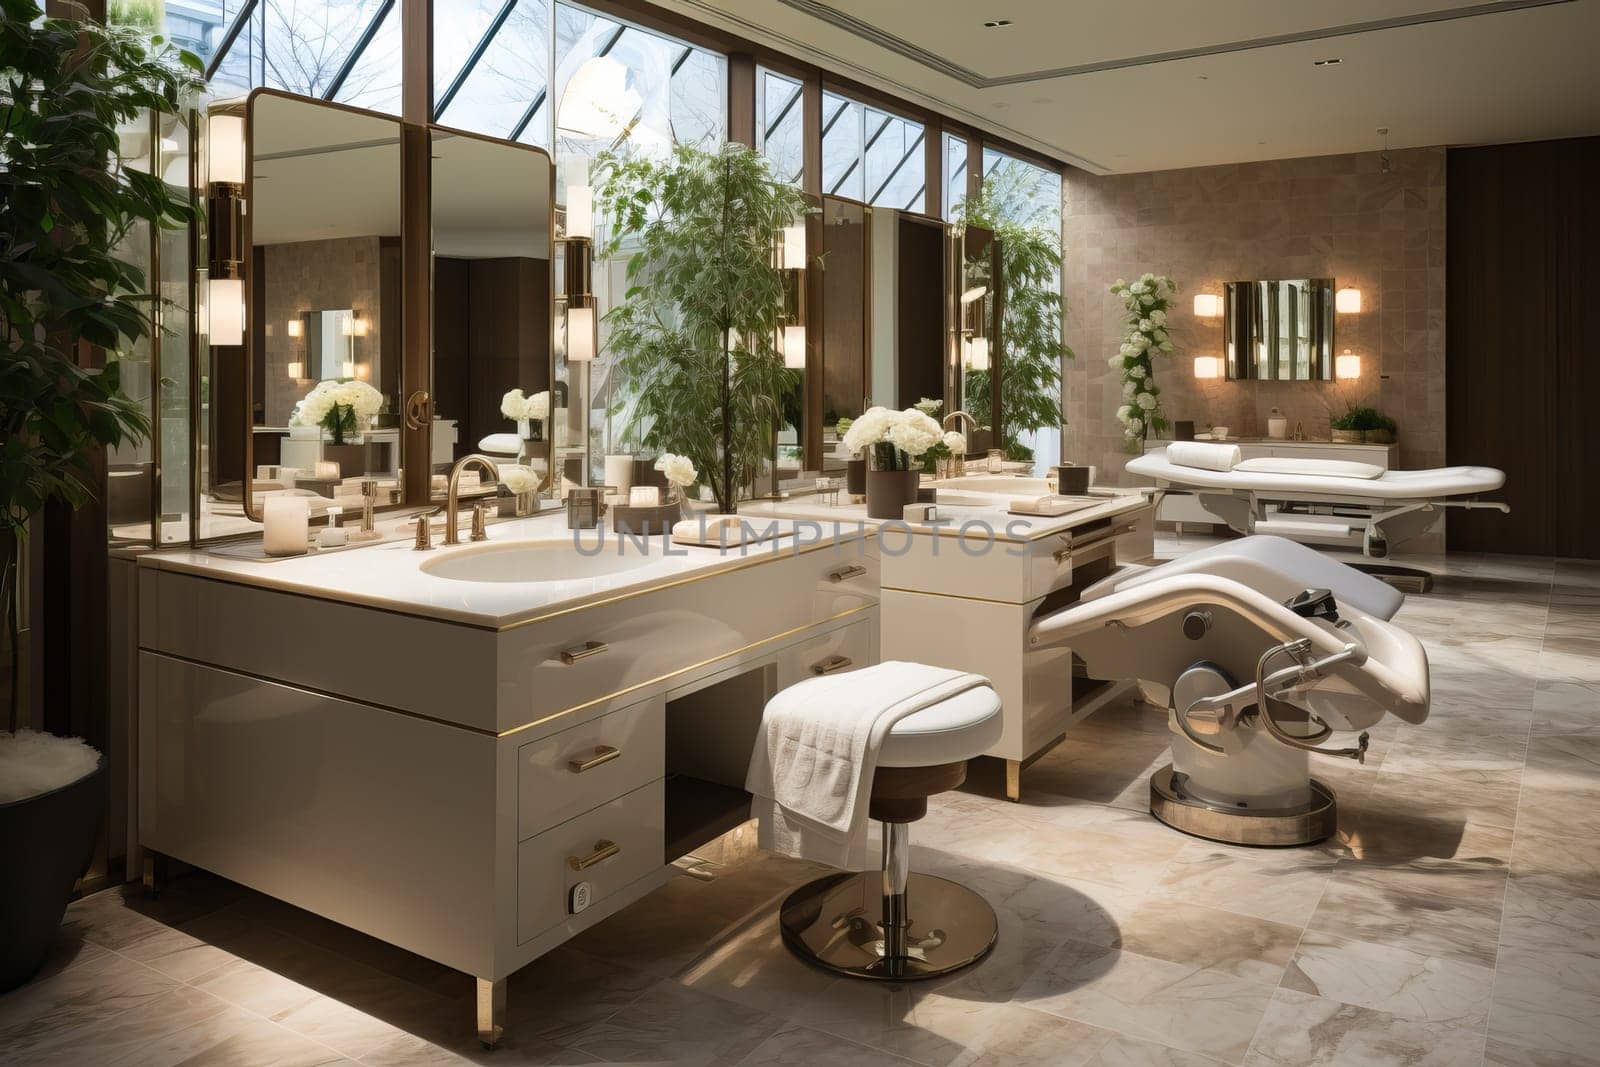 Luxurious interior in the spa salon. by Niko_Cingaryuk